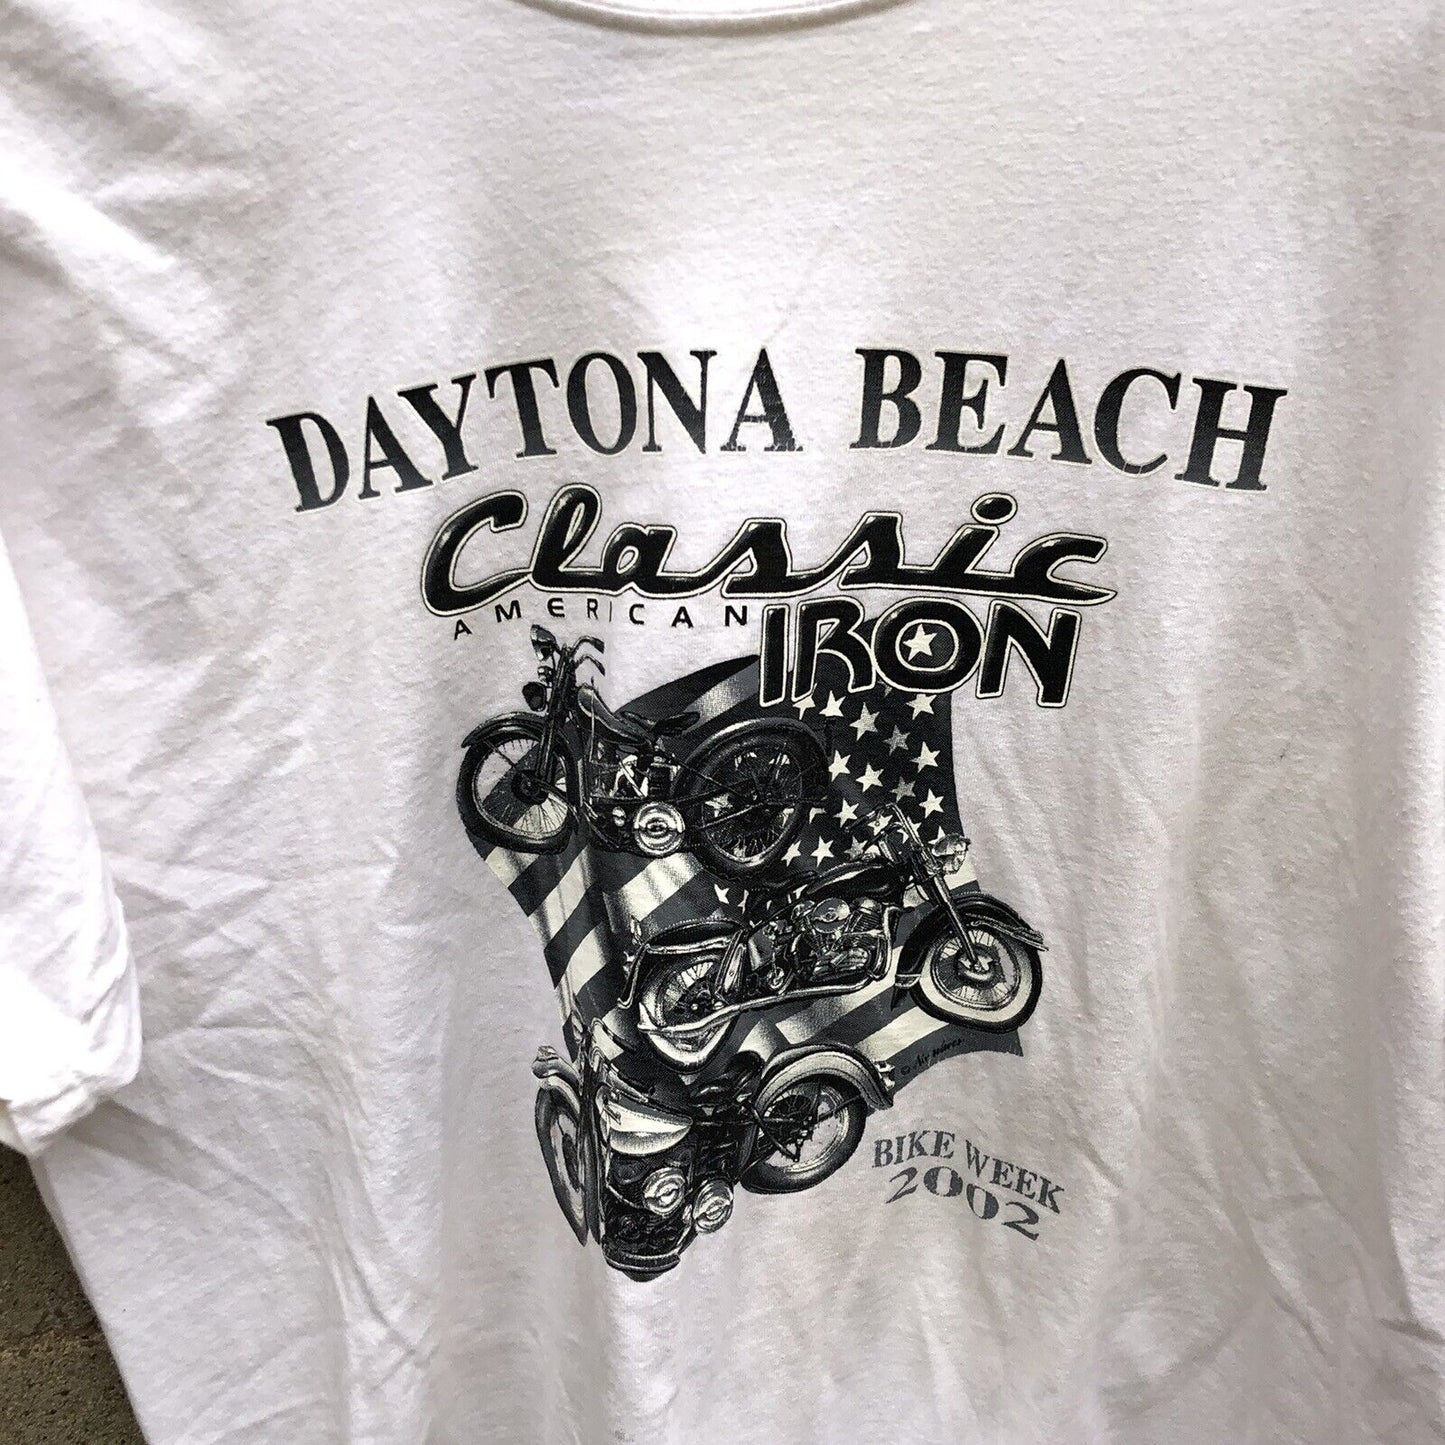 2002 Daytona Classic Iron Bike Week Shirt Size Large